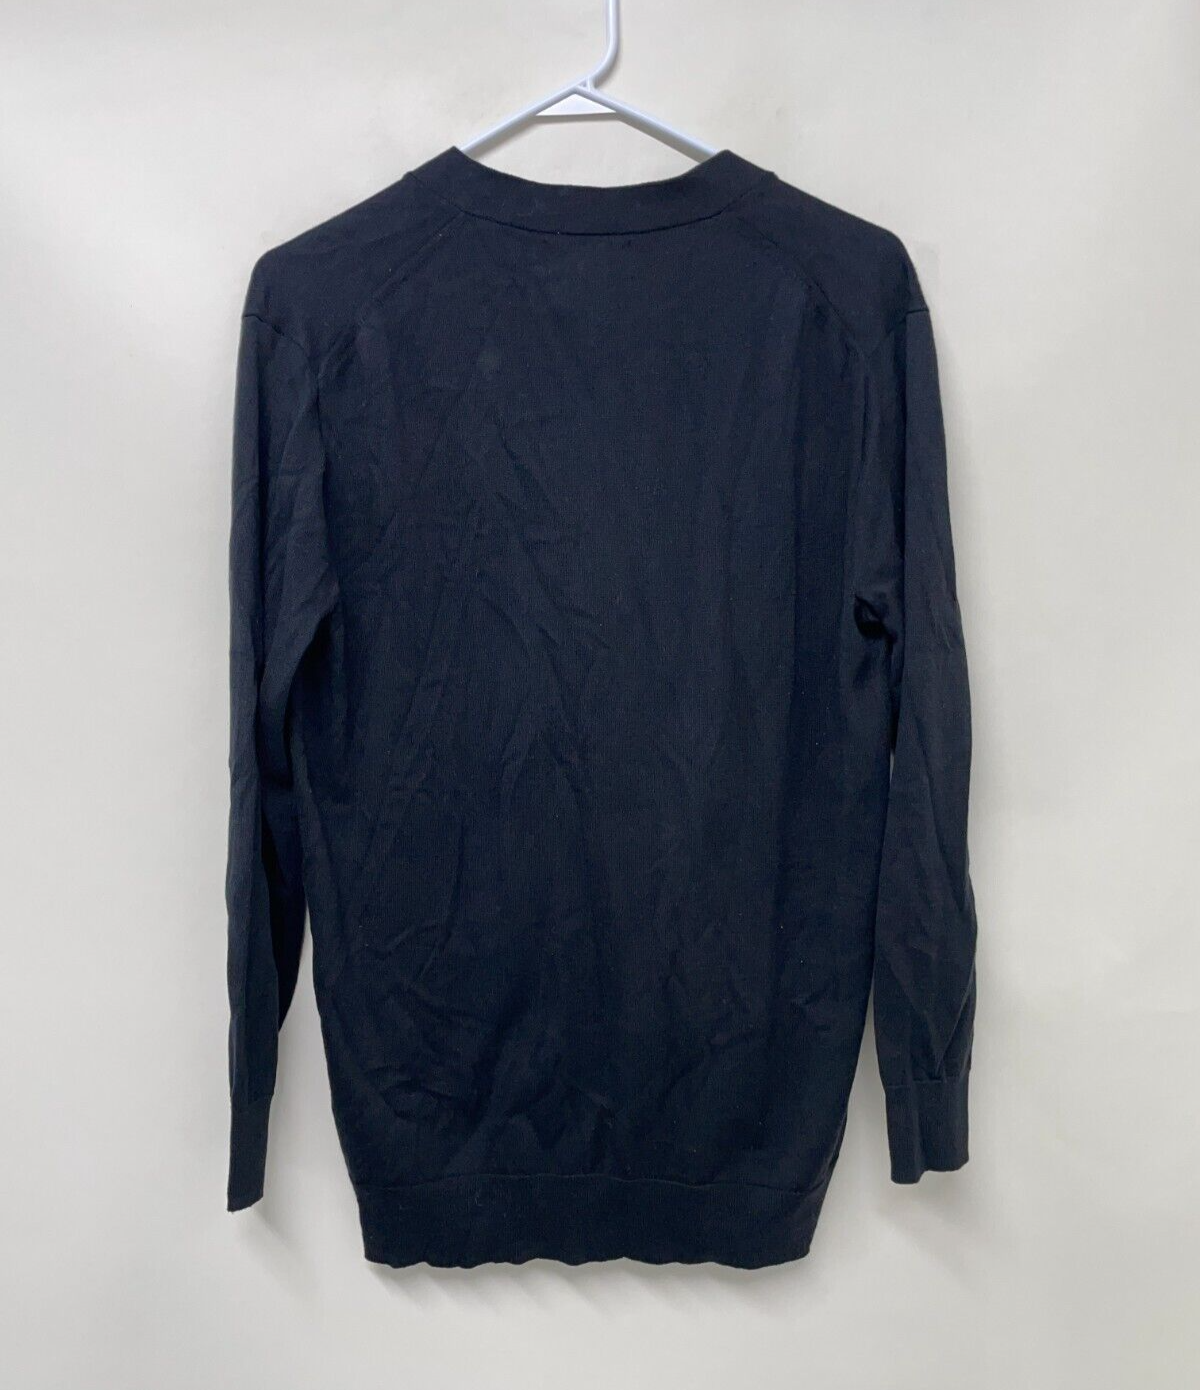 J. Crew Womens S V-Neck Boyfriend Cardigan Sweater Black Cotton Button Up M3975